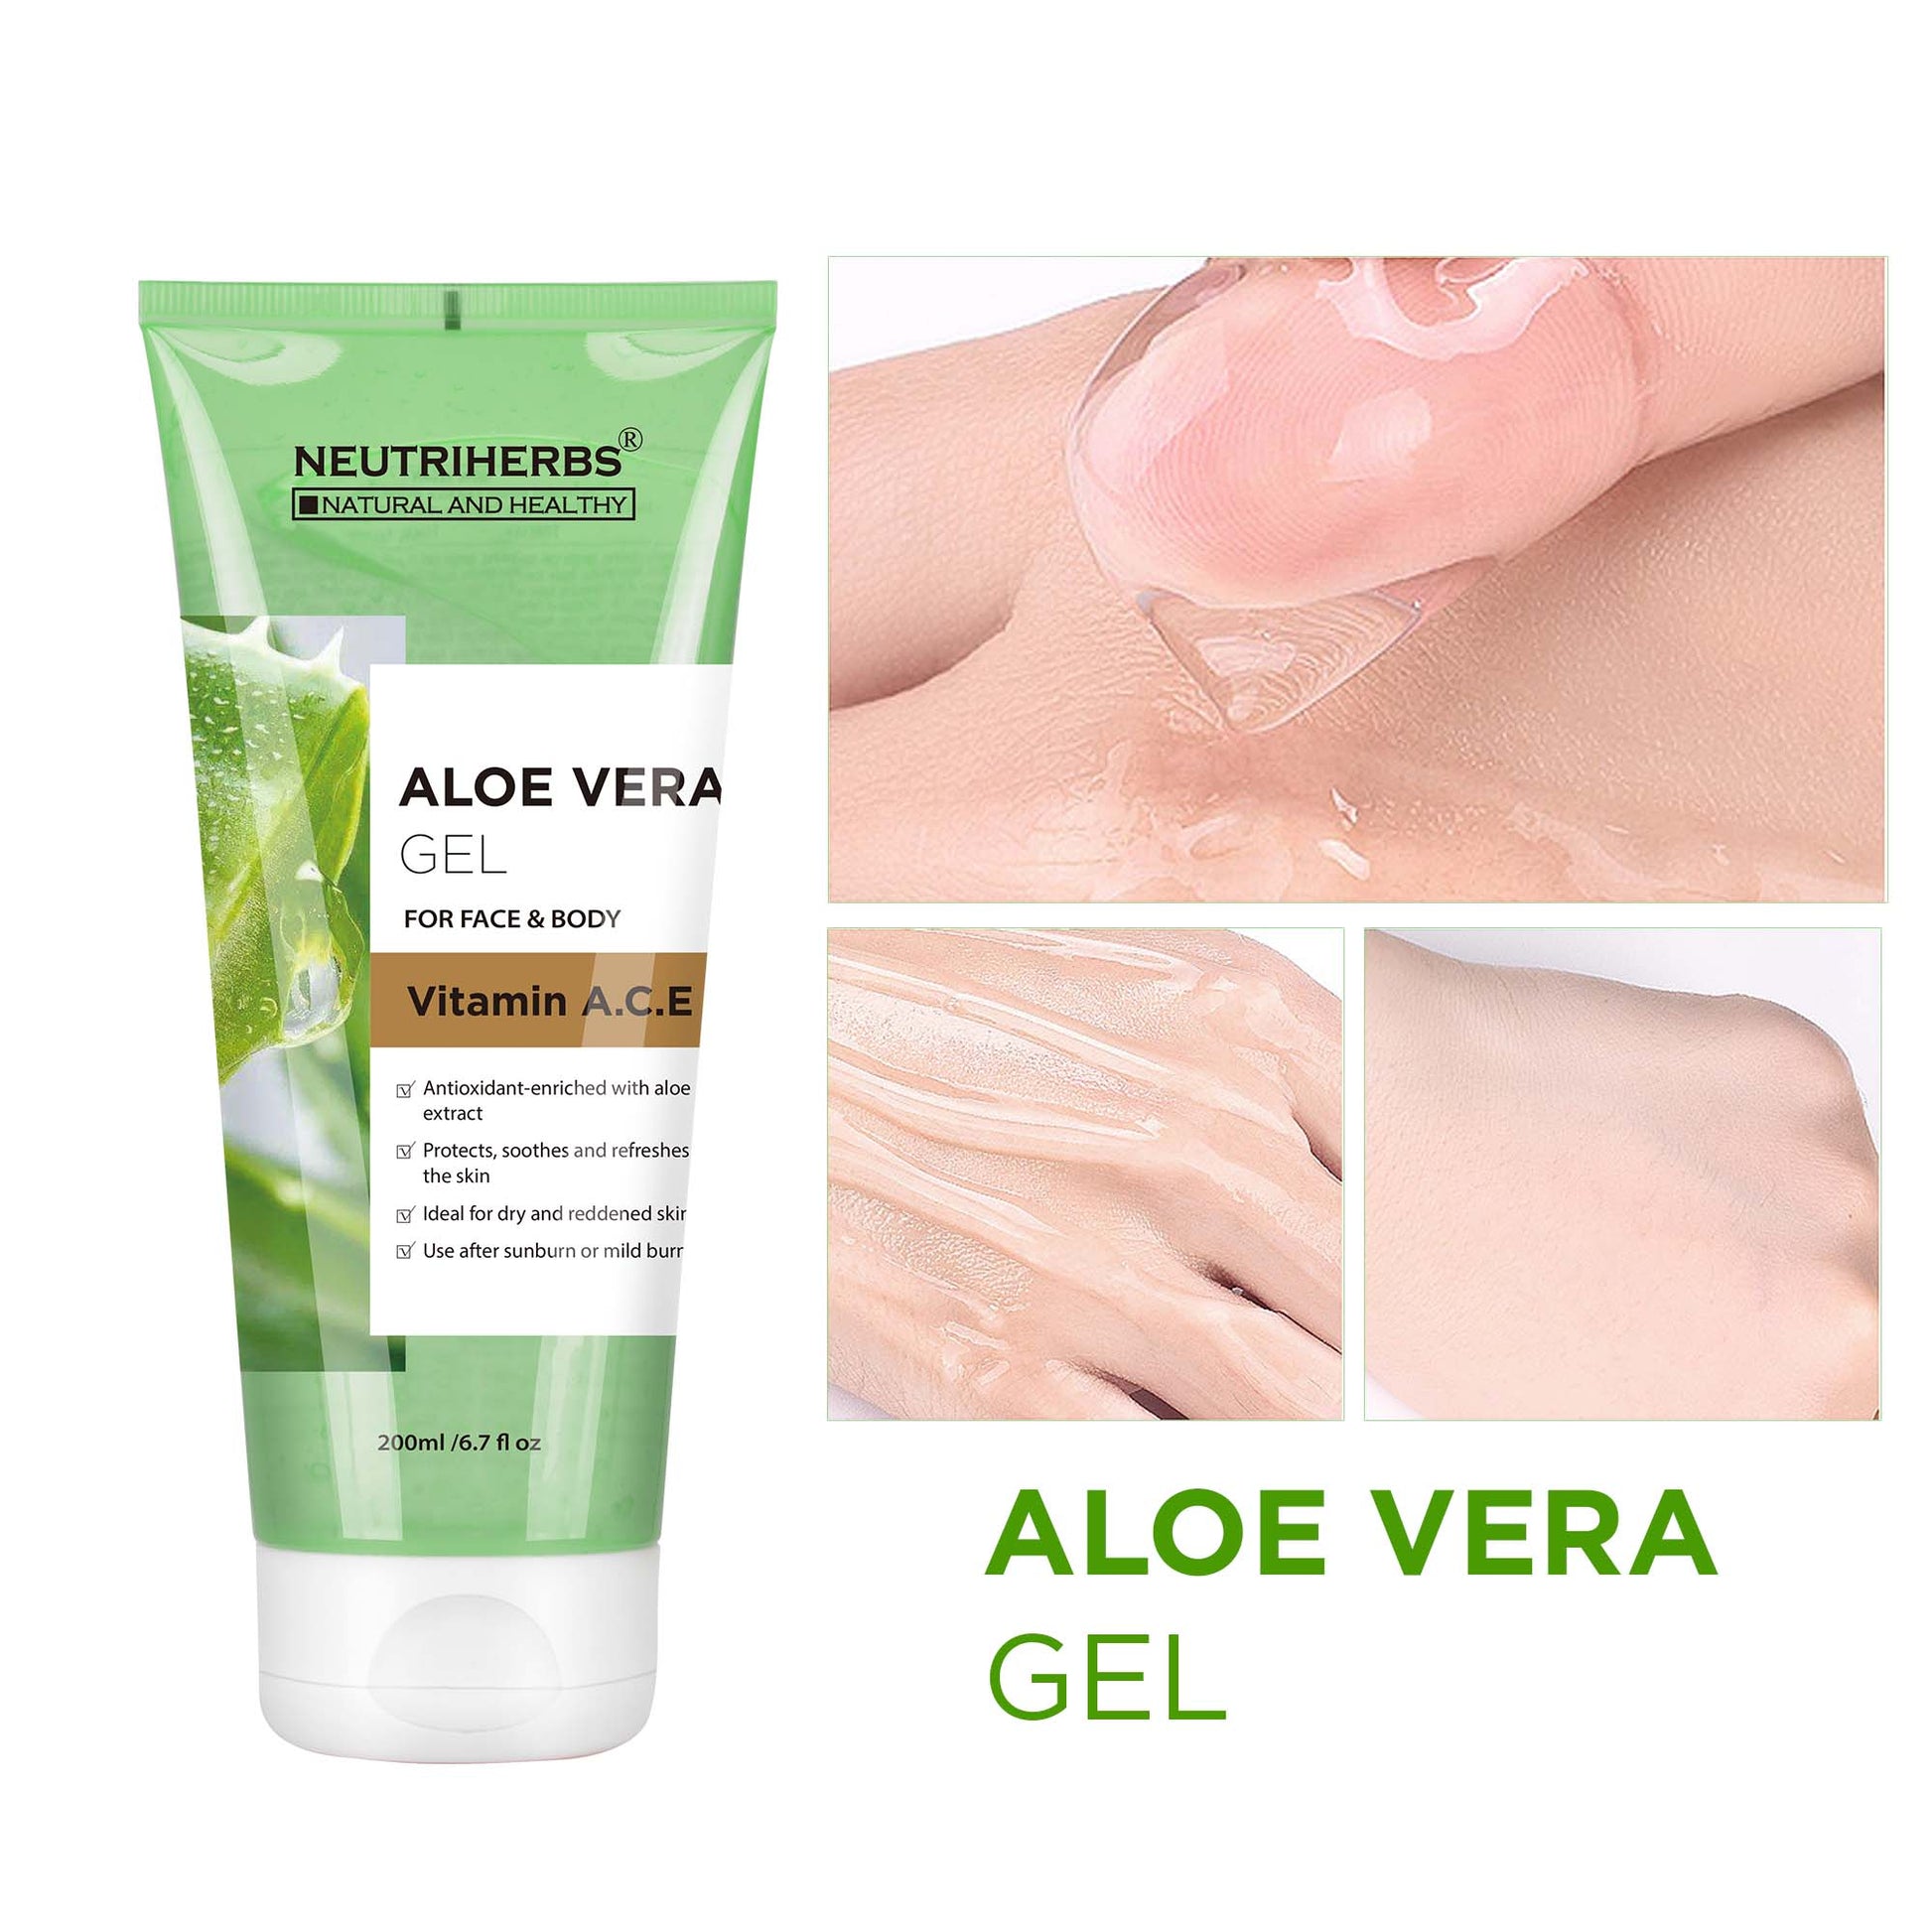 Neutriherbs Aloe Vera Gel with Vitamin A, C, E- replenishes moisture and softens skin